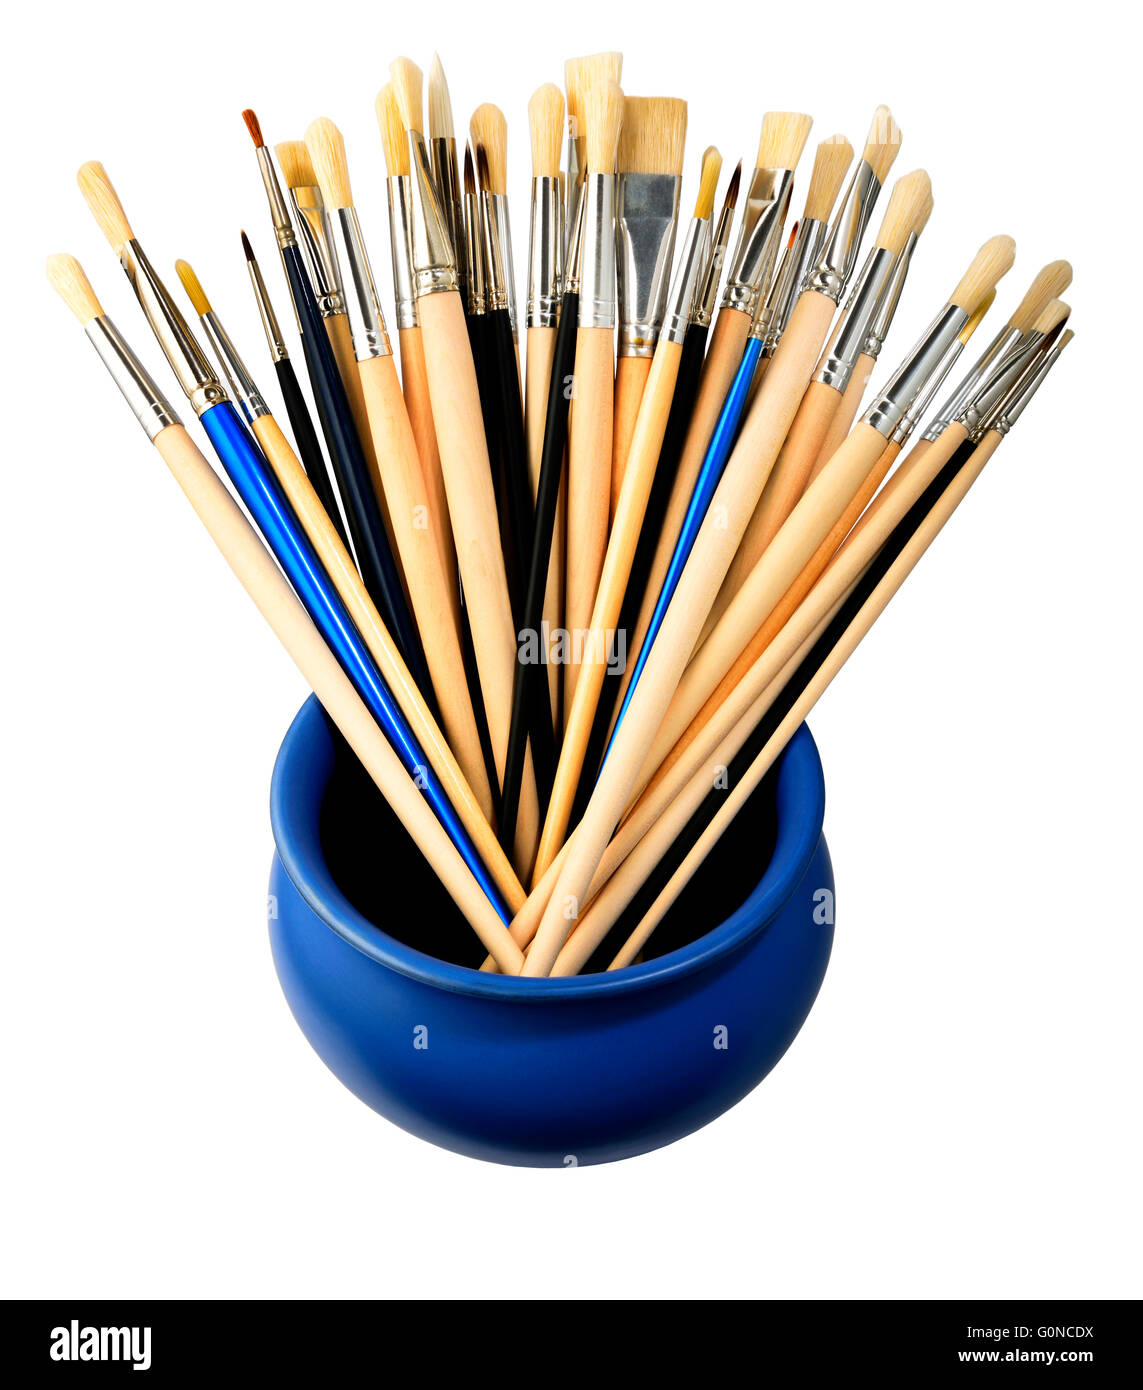 art brushes in bowl Stock Photo